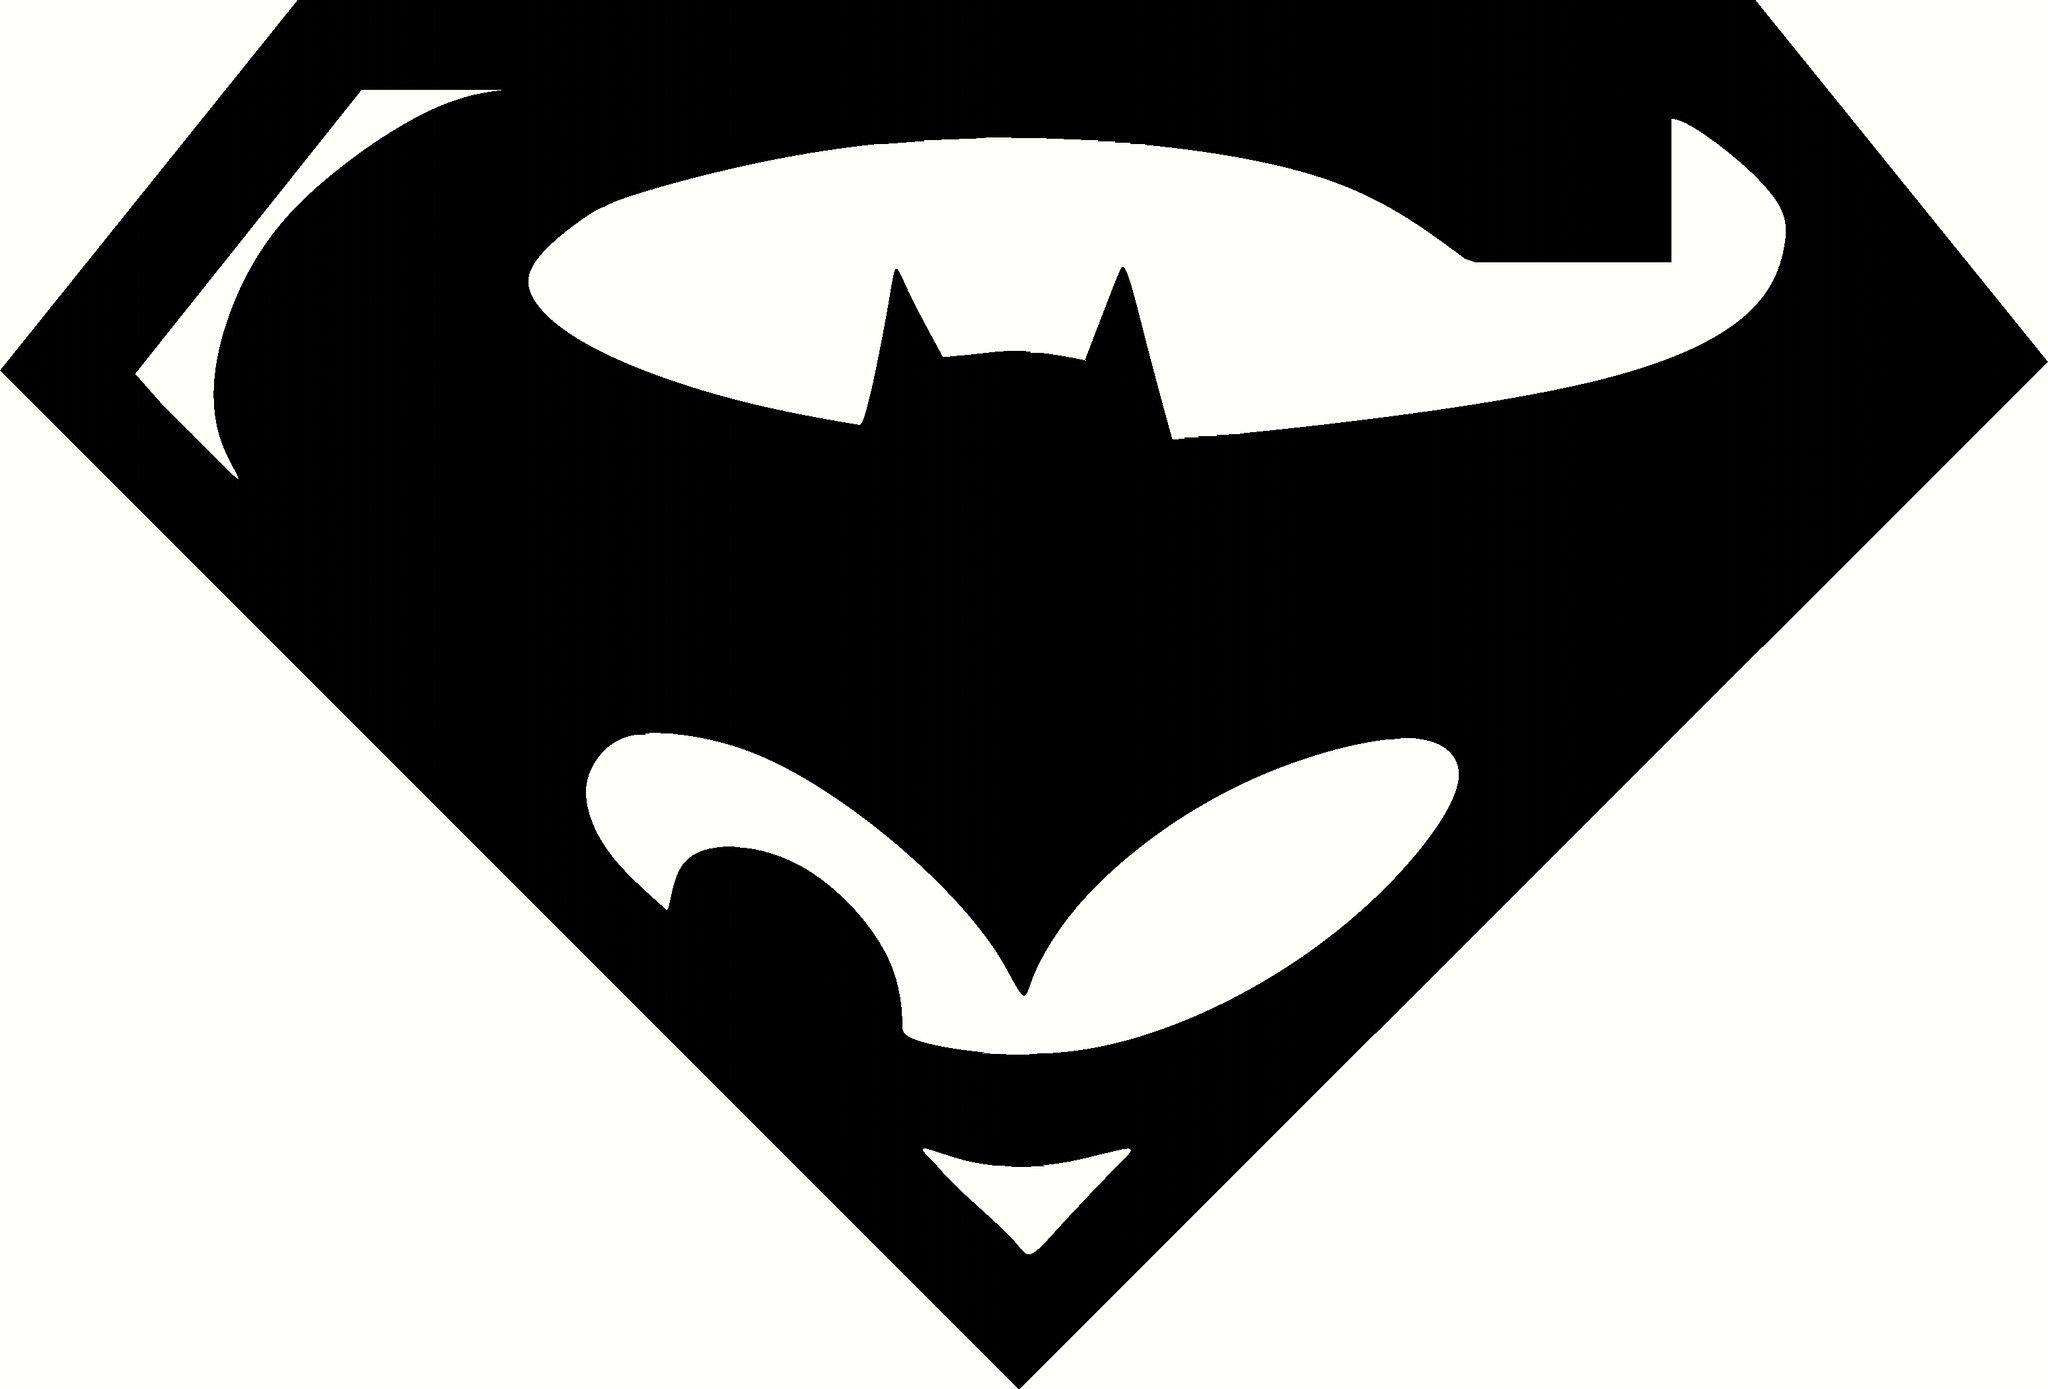 Super Bat Logo - Super/Bat Logo Vinyl Decal Graphic - Choose your Color and Size ...